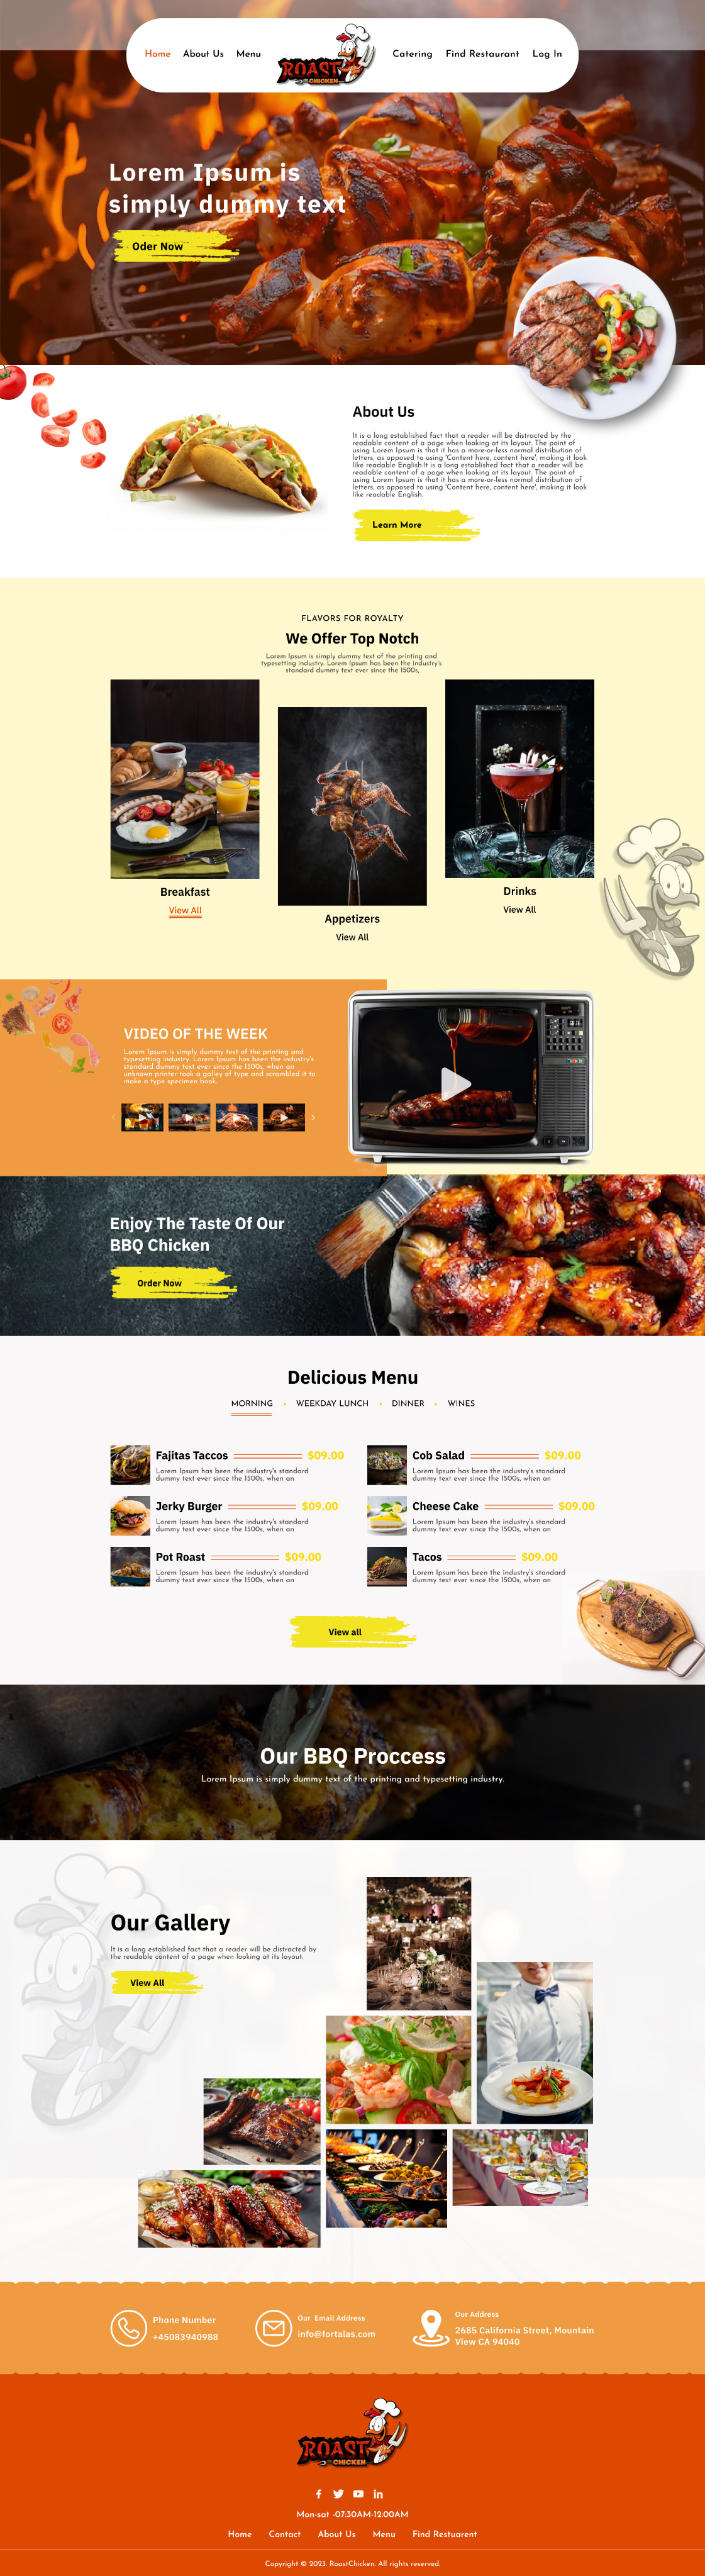 Restaurant website design example